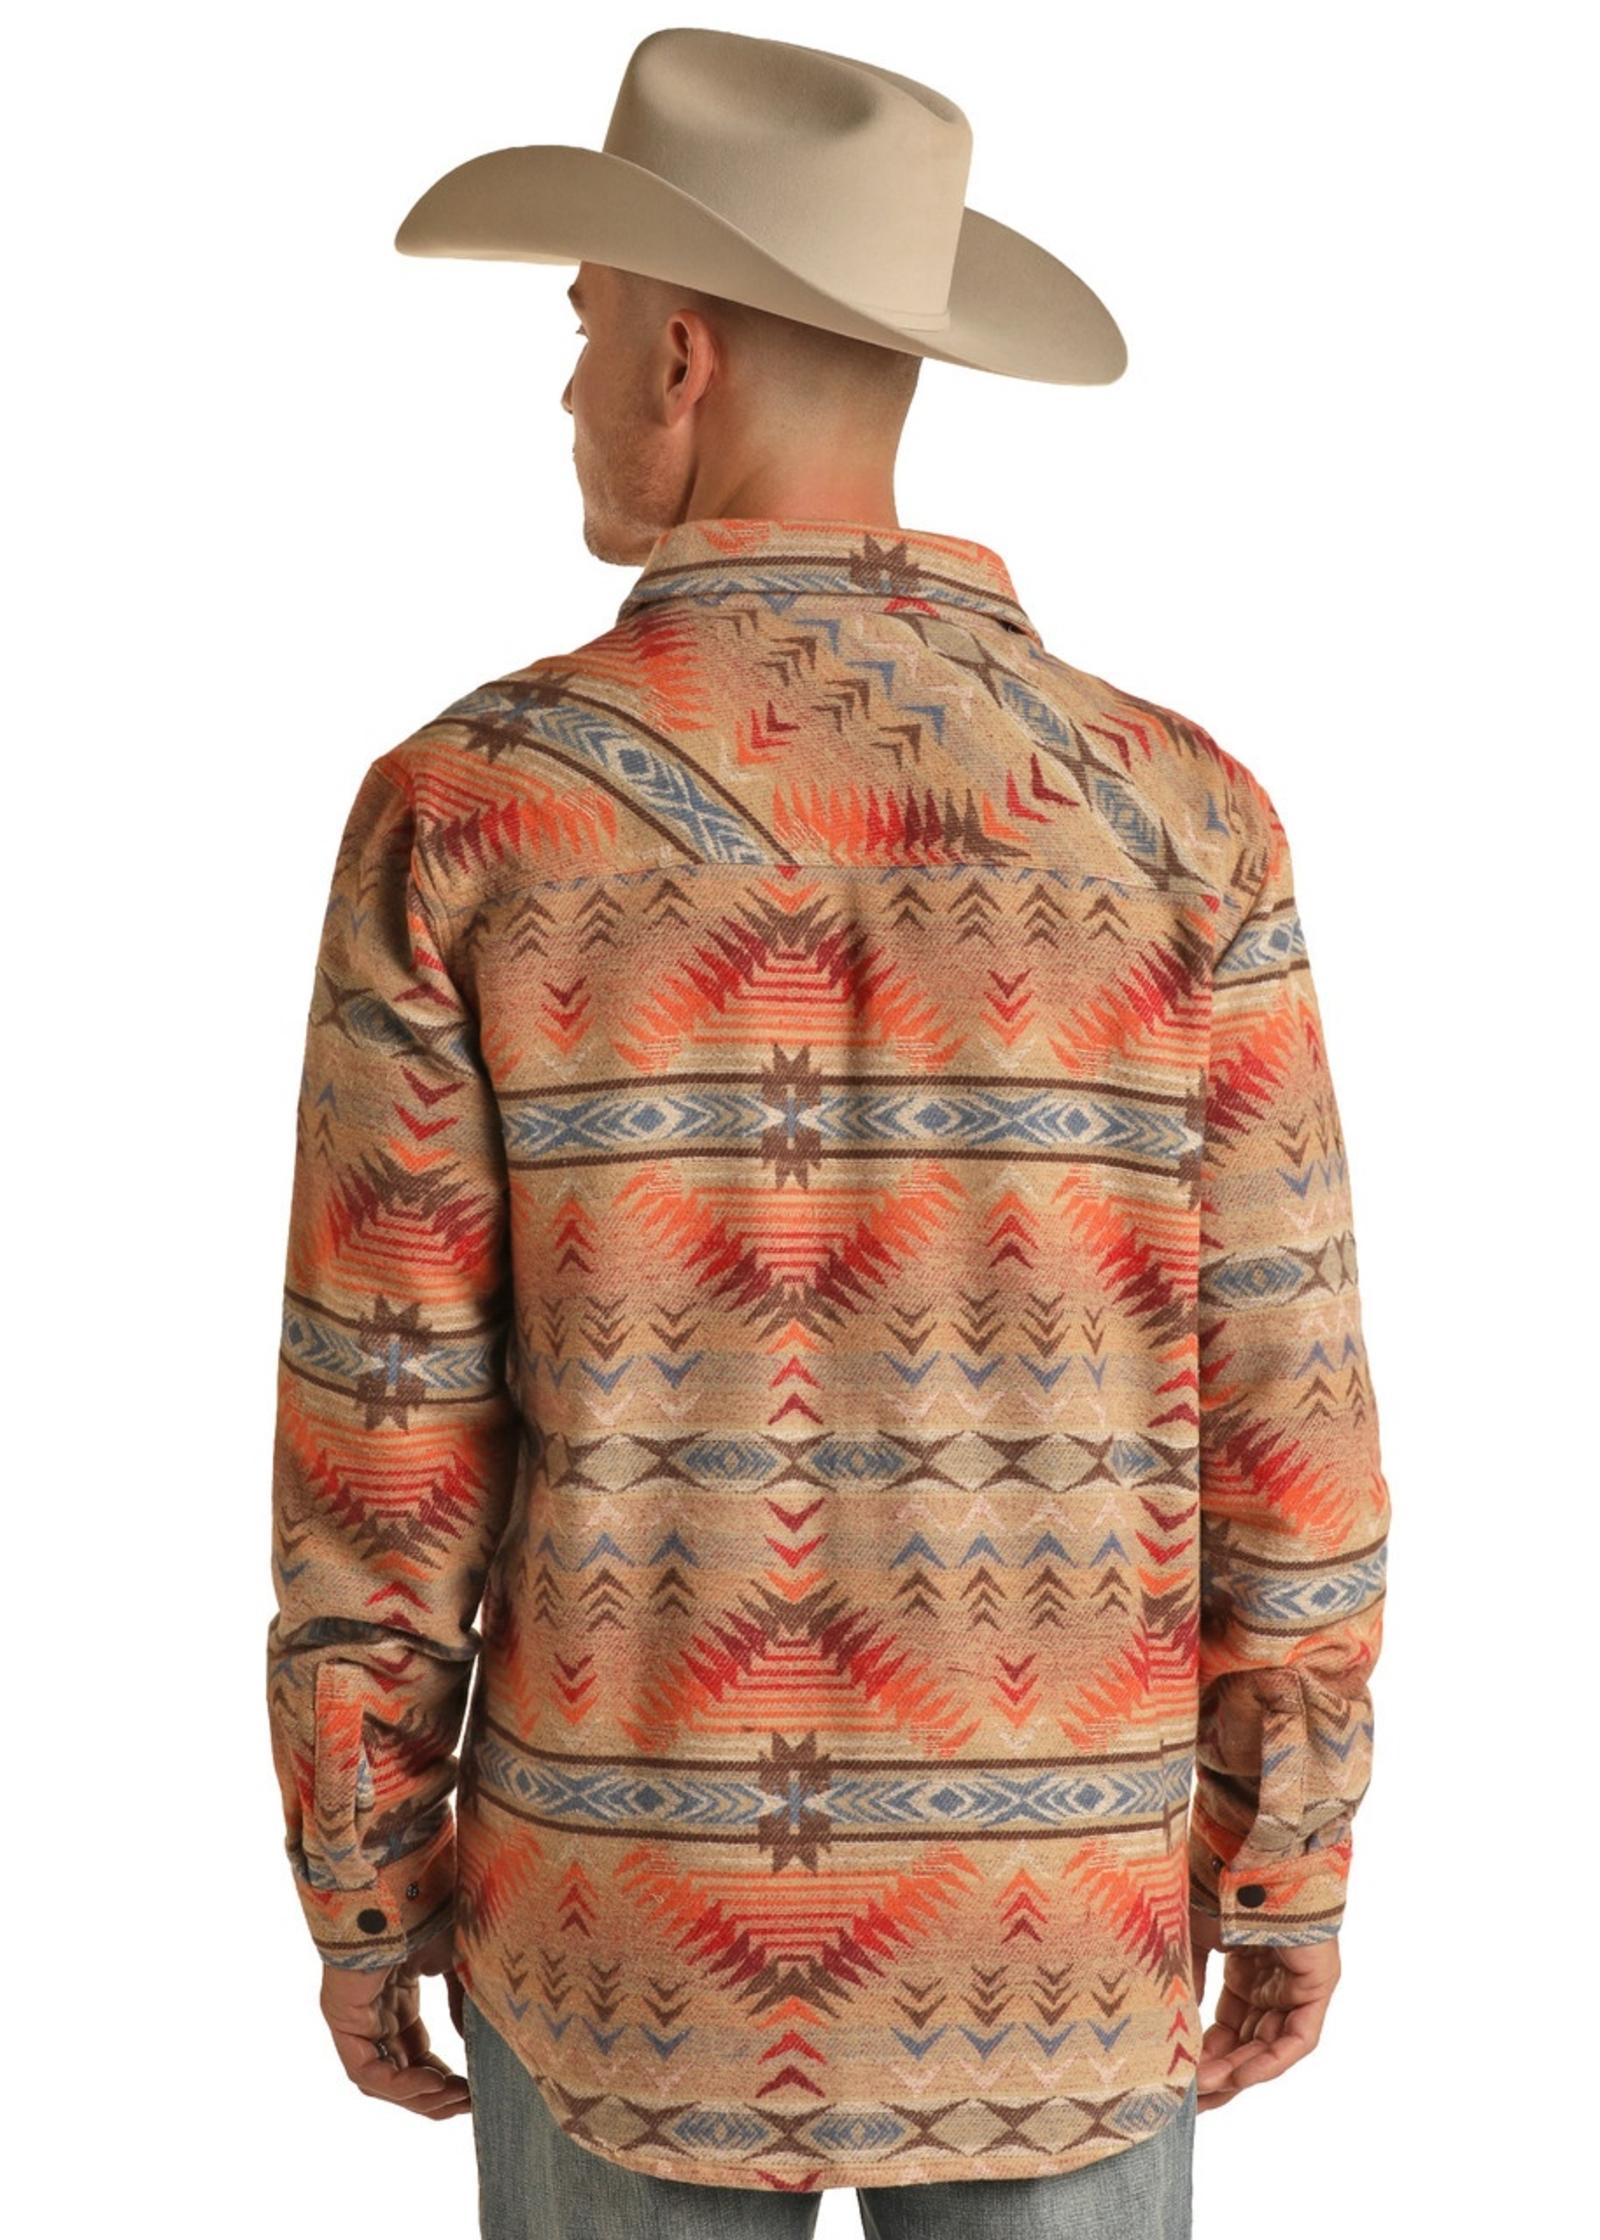 Rock & Roll Men's Tan and Rust Aztec Shirt Jacket